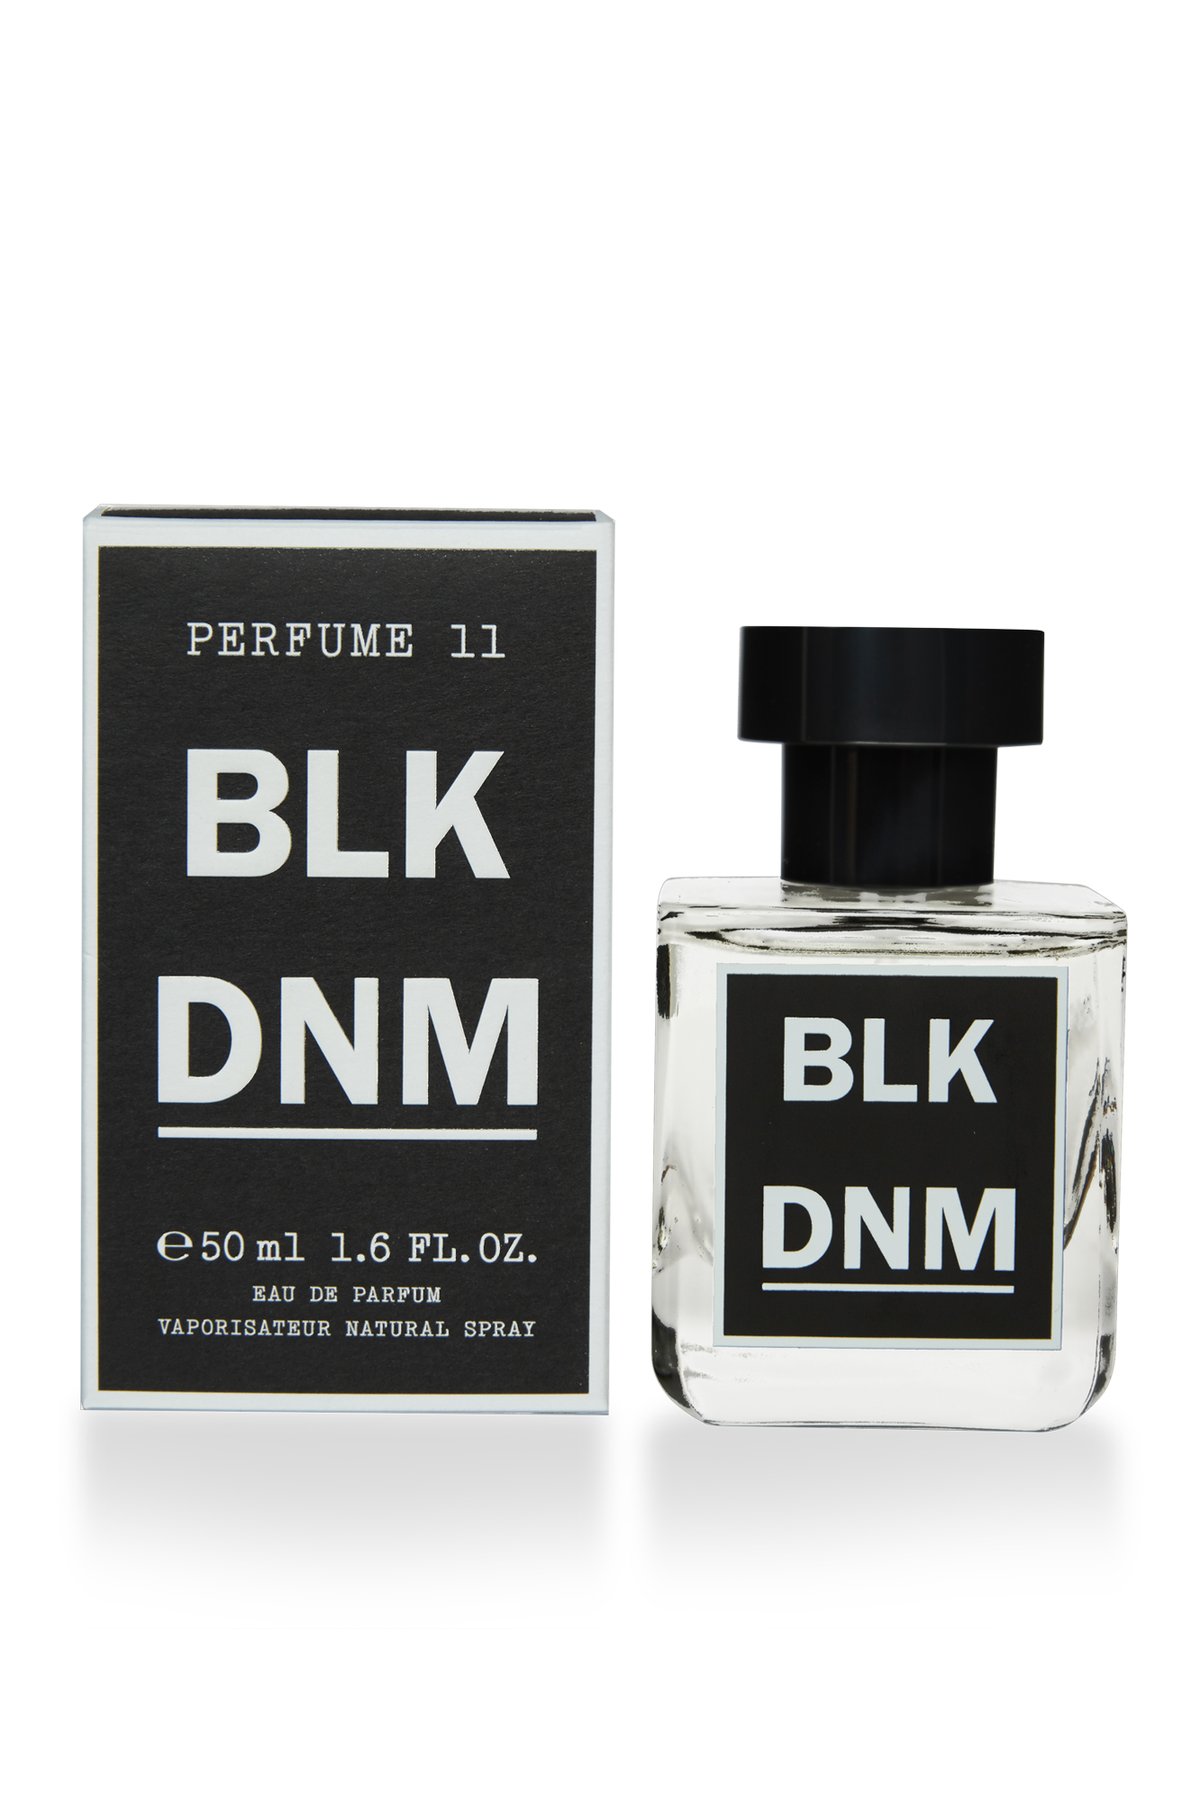 Perfume 11 — BLK DNM